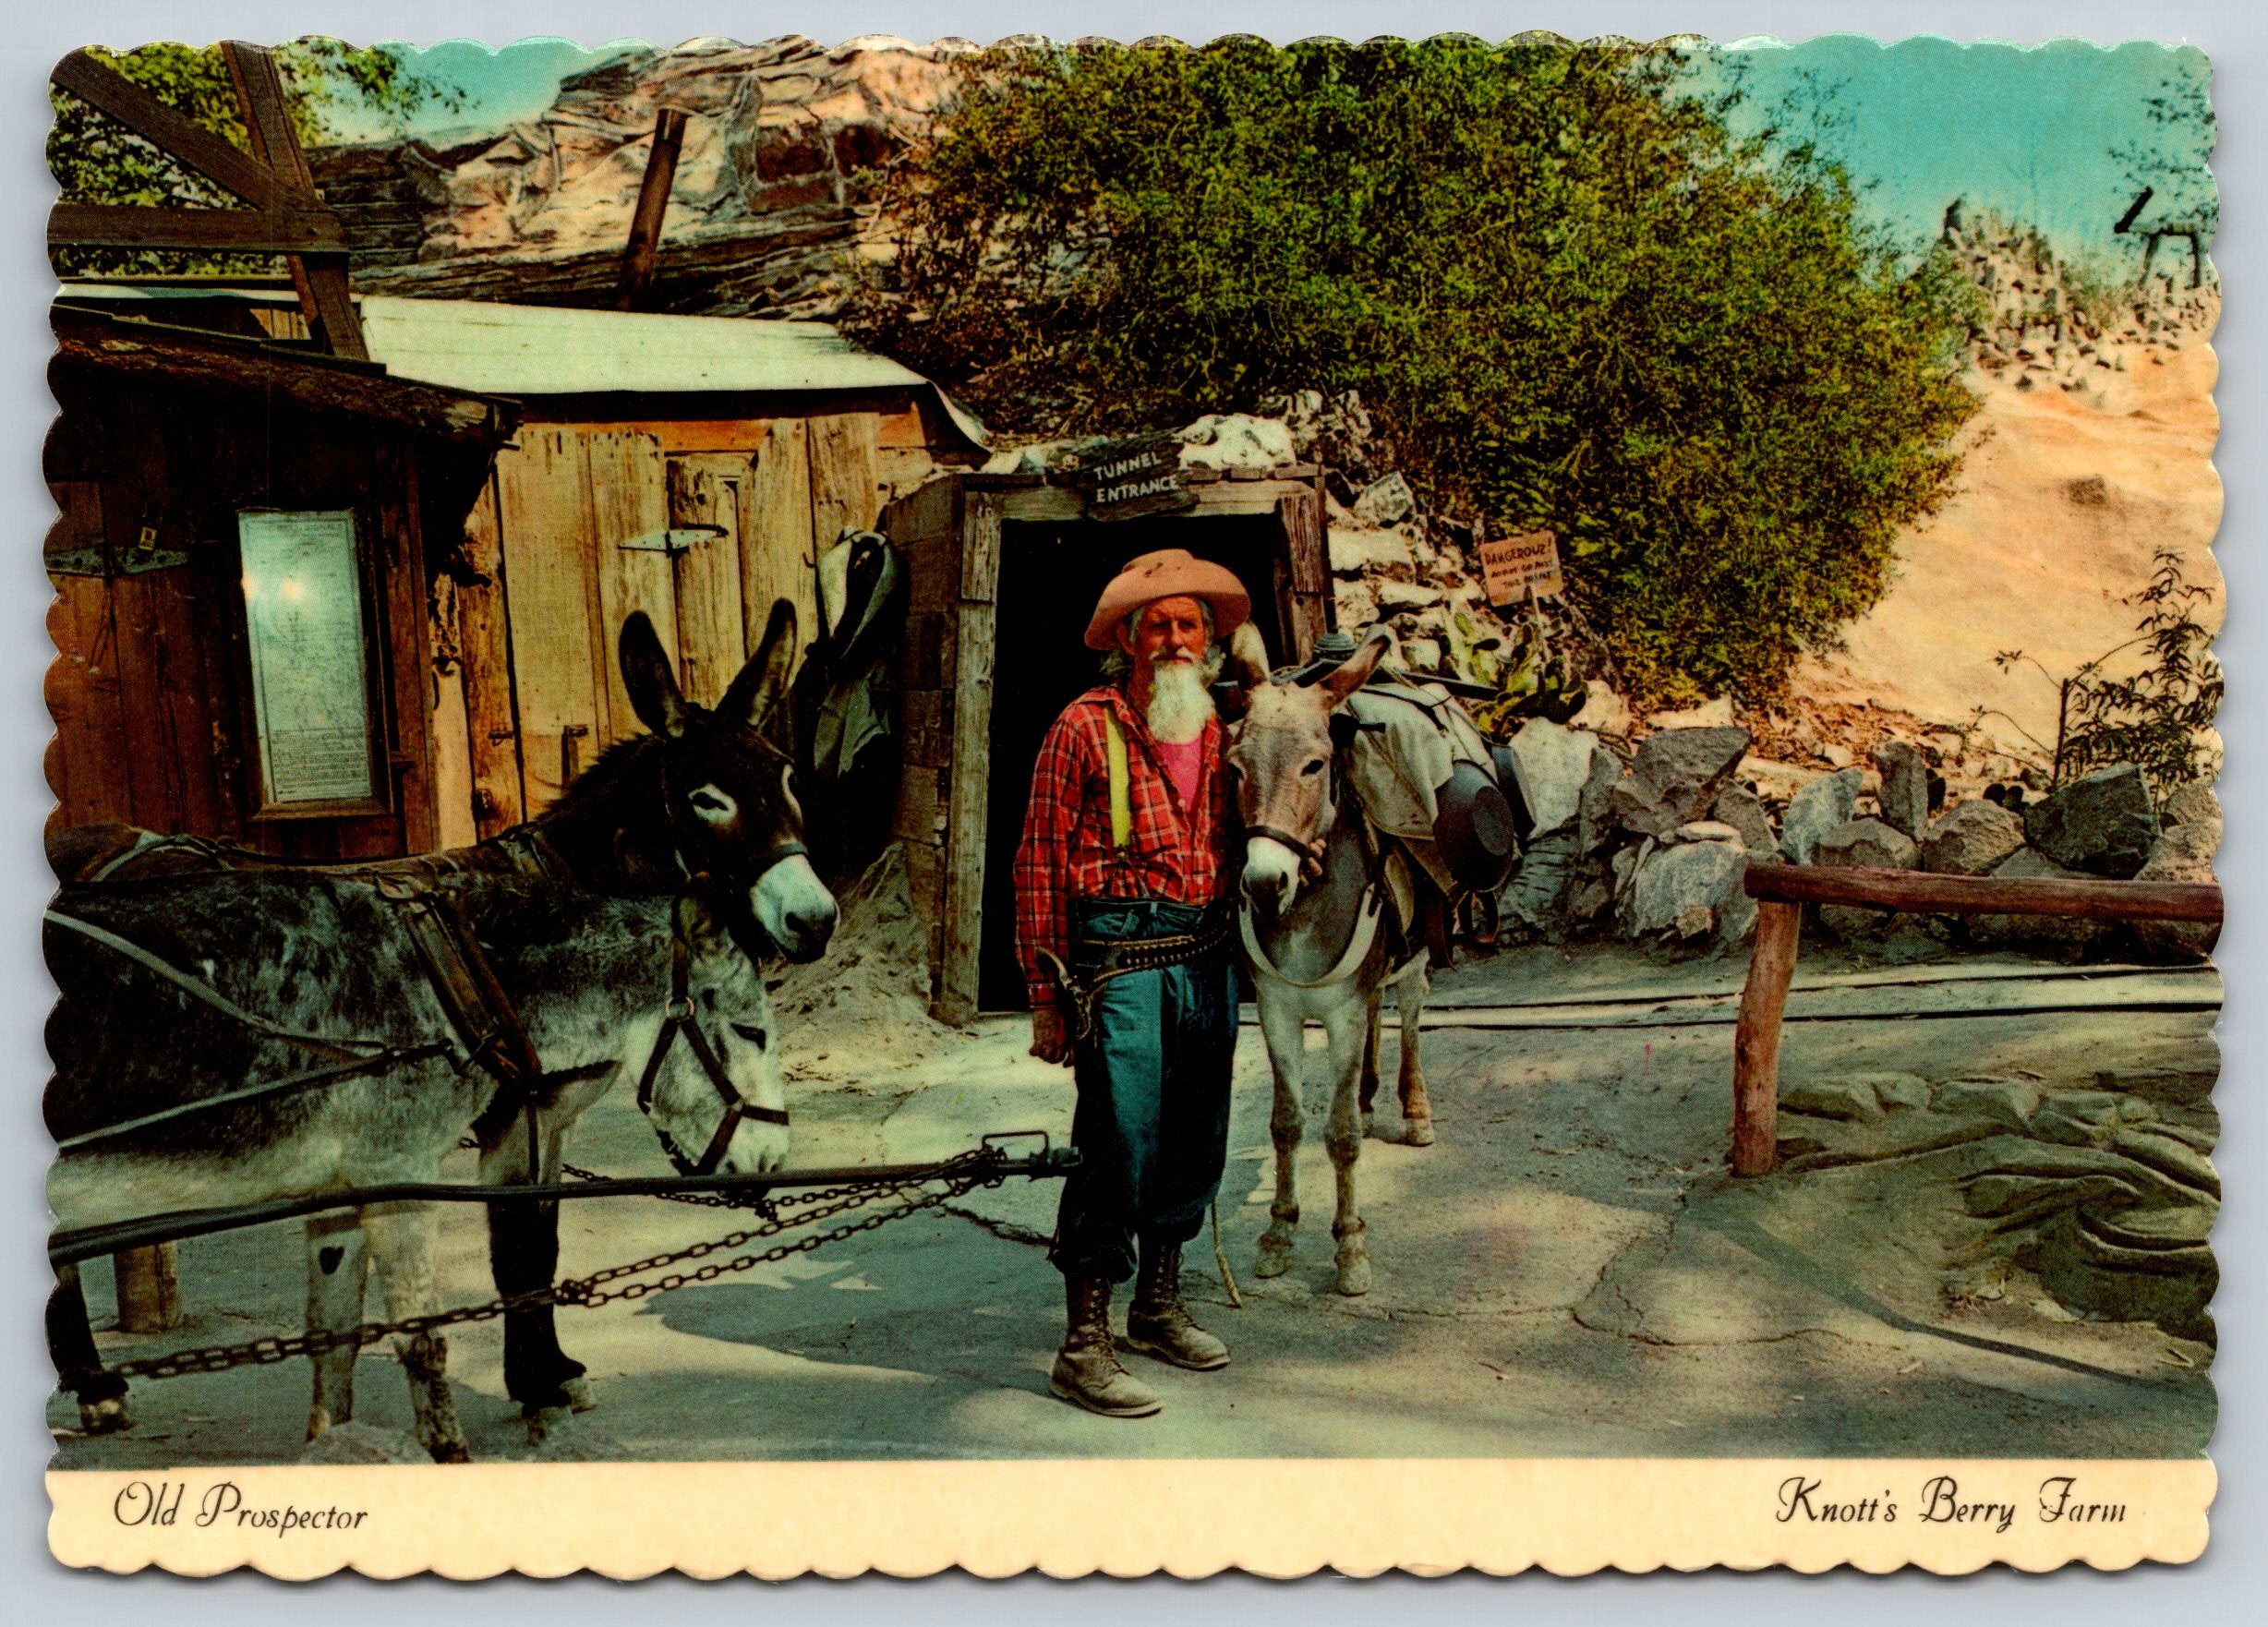 Old Prospector, Knott's Berry Farm, Vintage Post Card